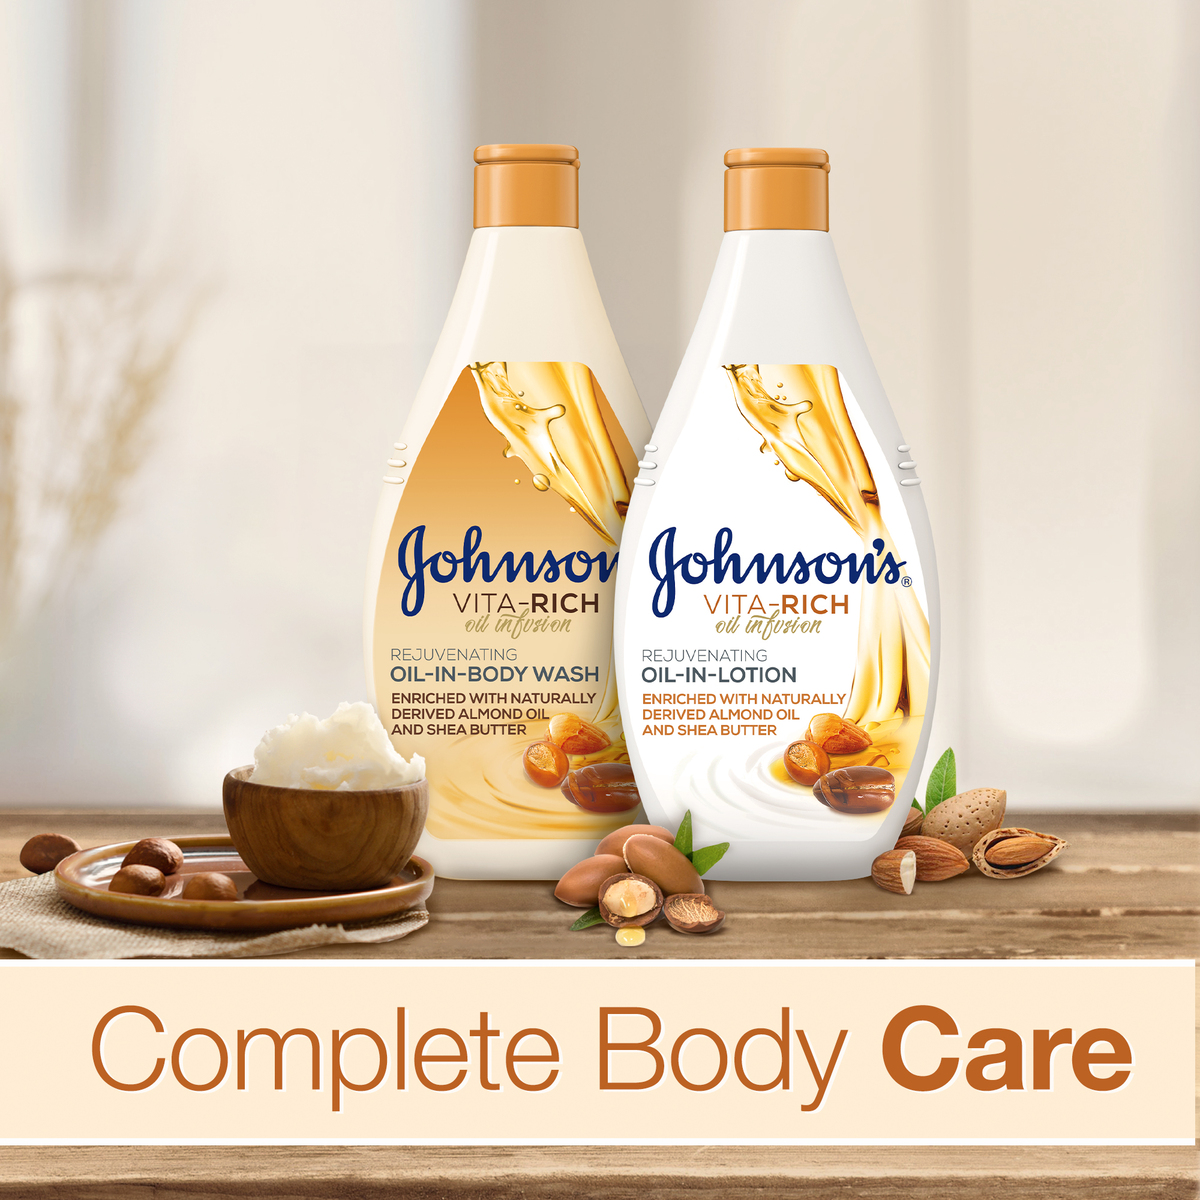 Johnson's Body Lotion Vita-Rich Oil-In-Lotion Rejuvenating 400 ml